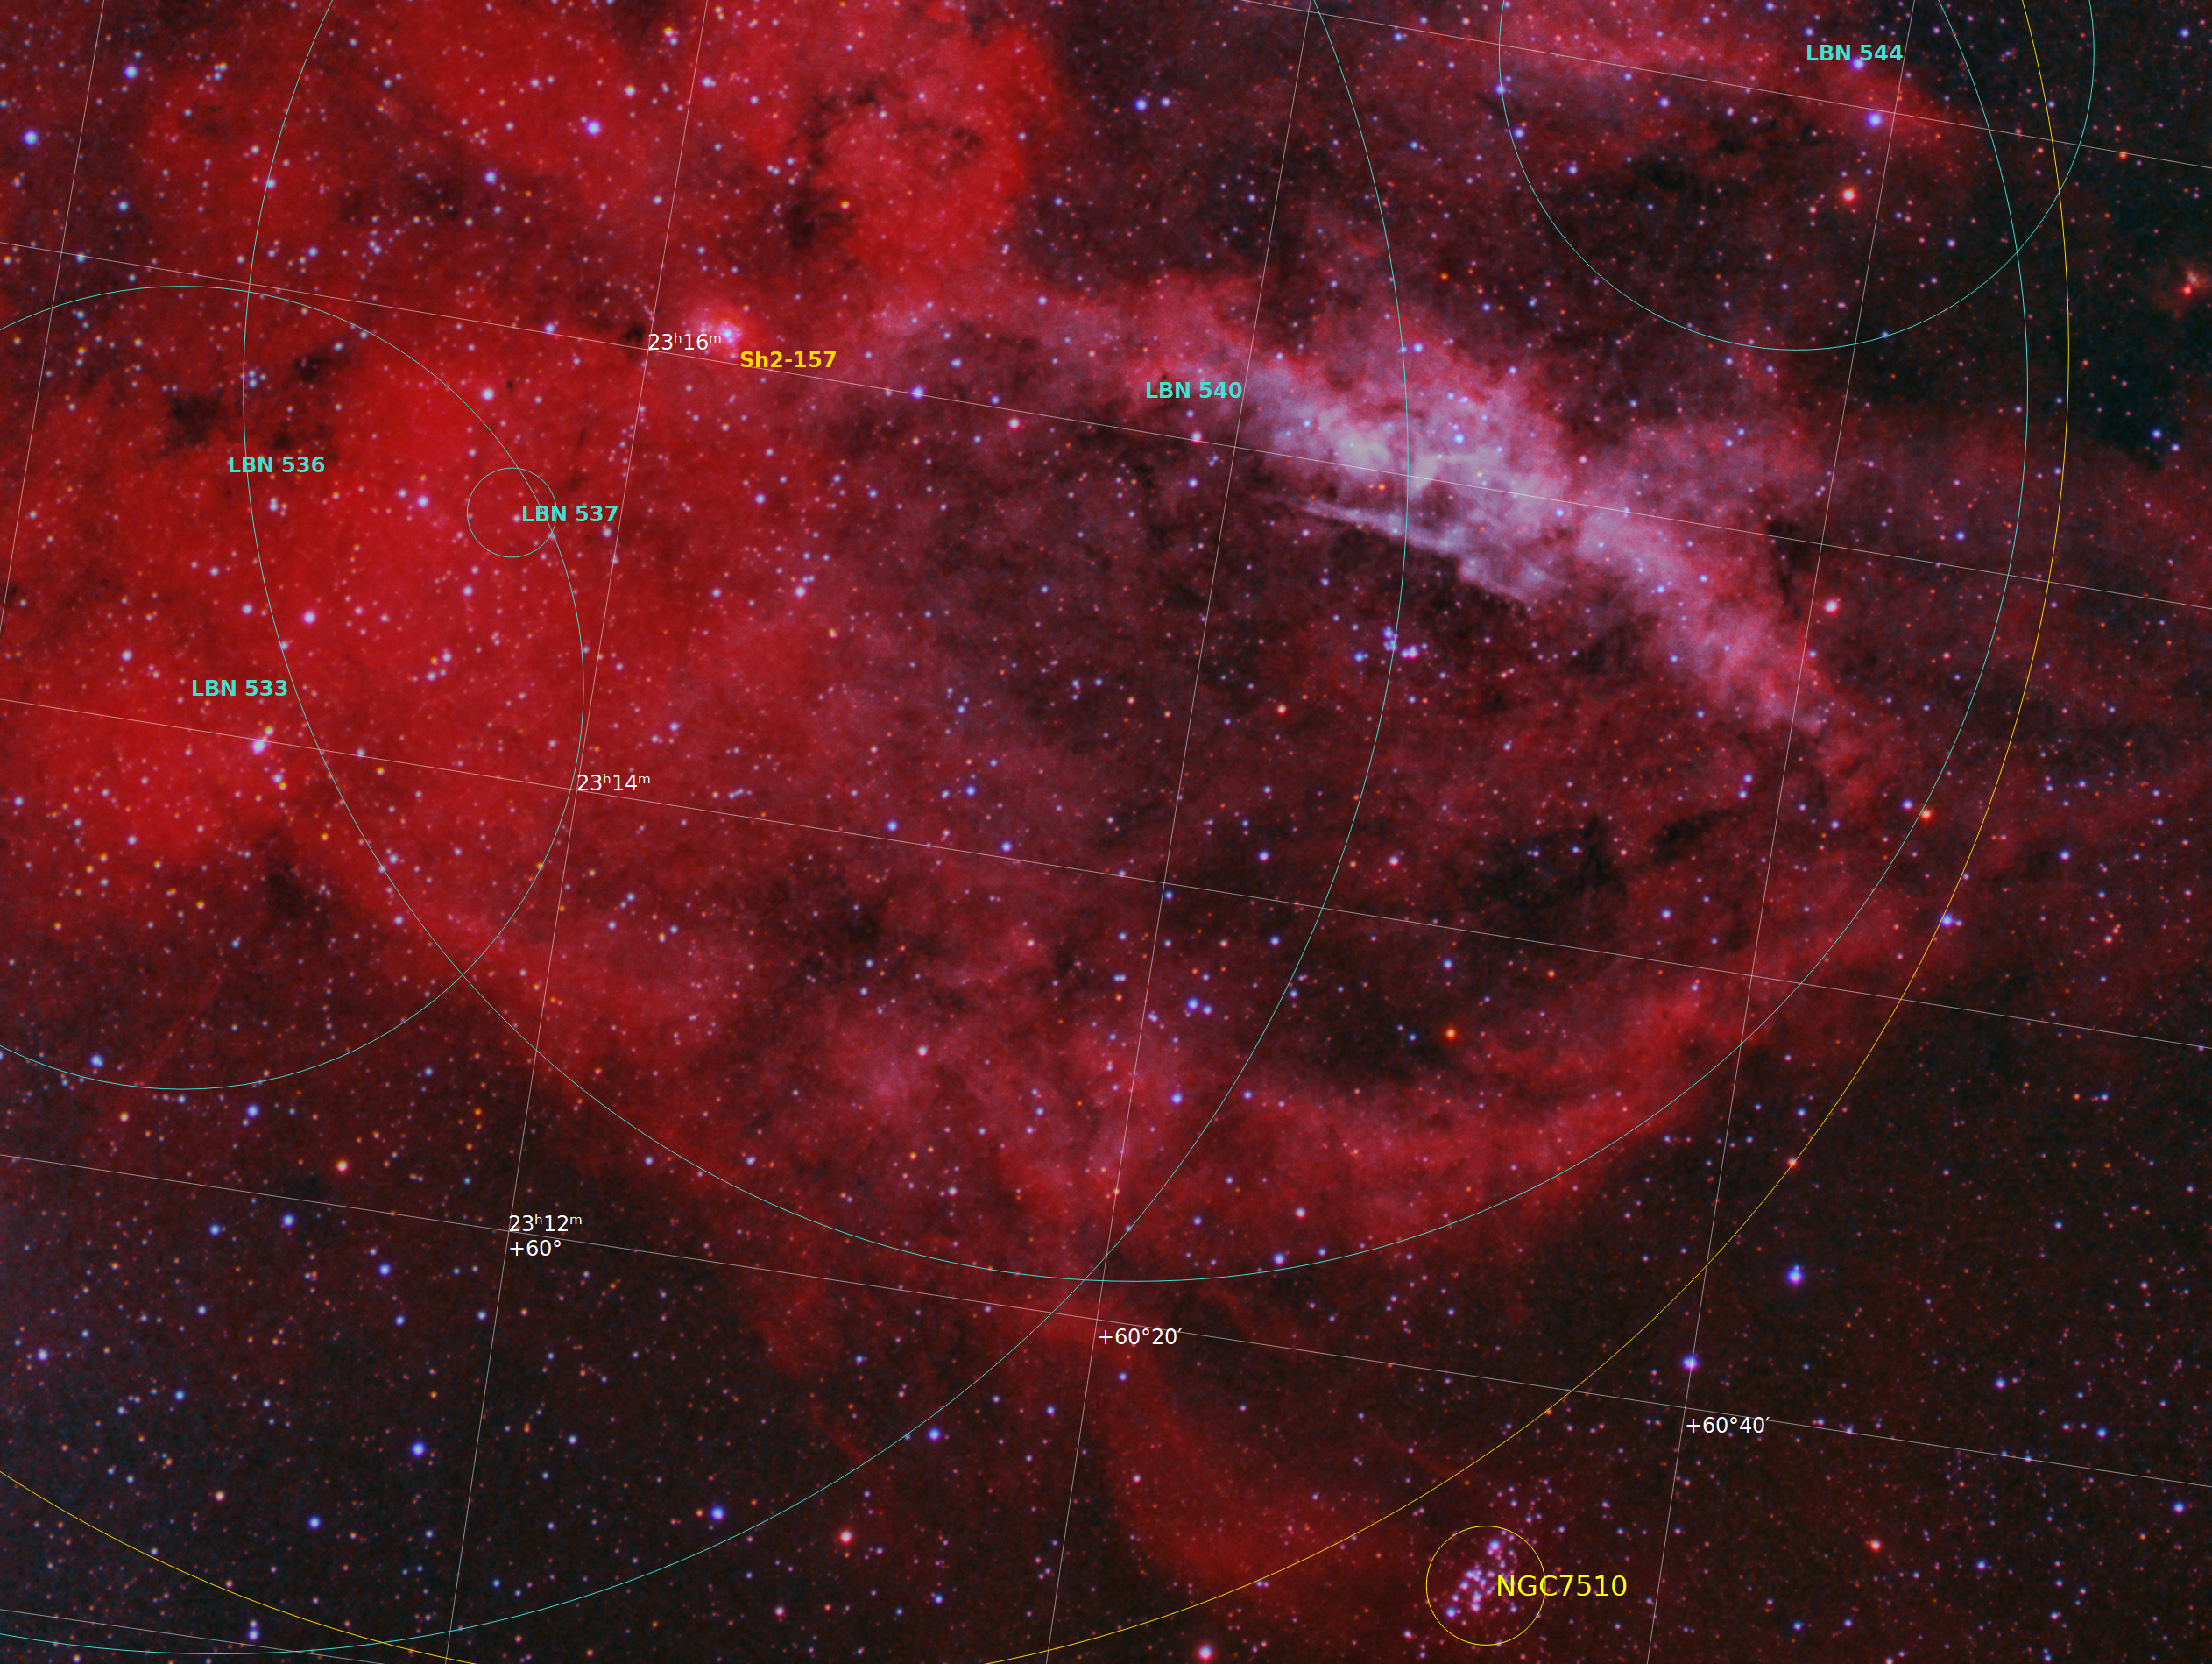 Annotated Lobster Claw nebula (SH2-157) HaR-O3G-O3B , NGC7510, LBN 533,536,537,540,544, PLN 110-0.1